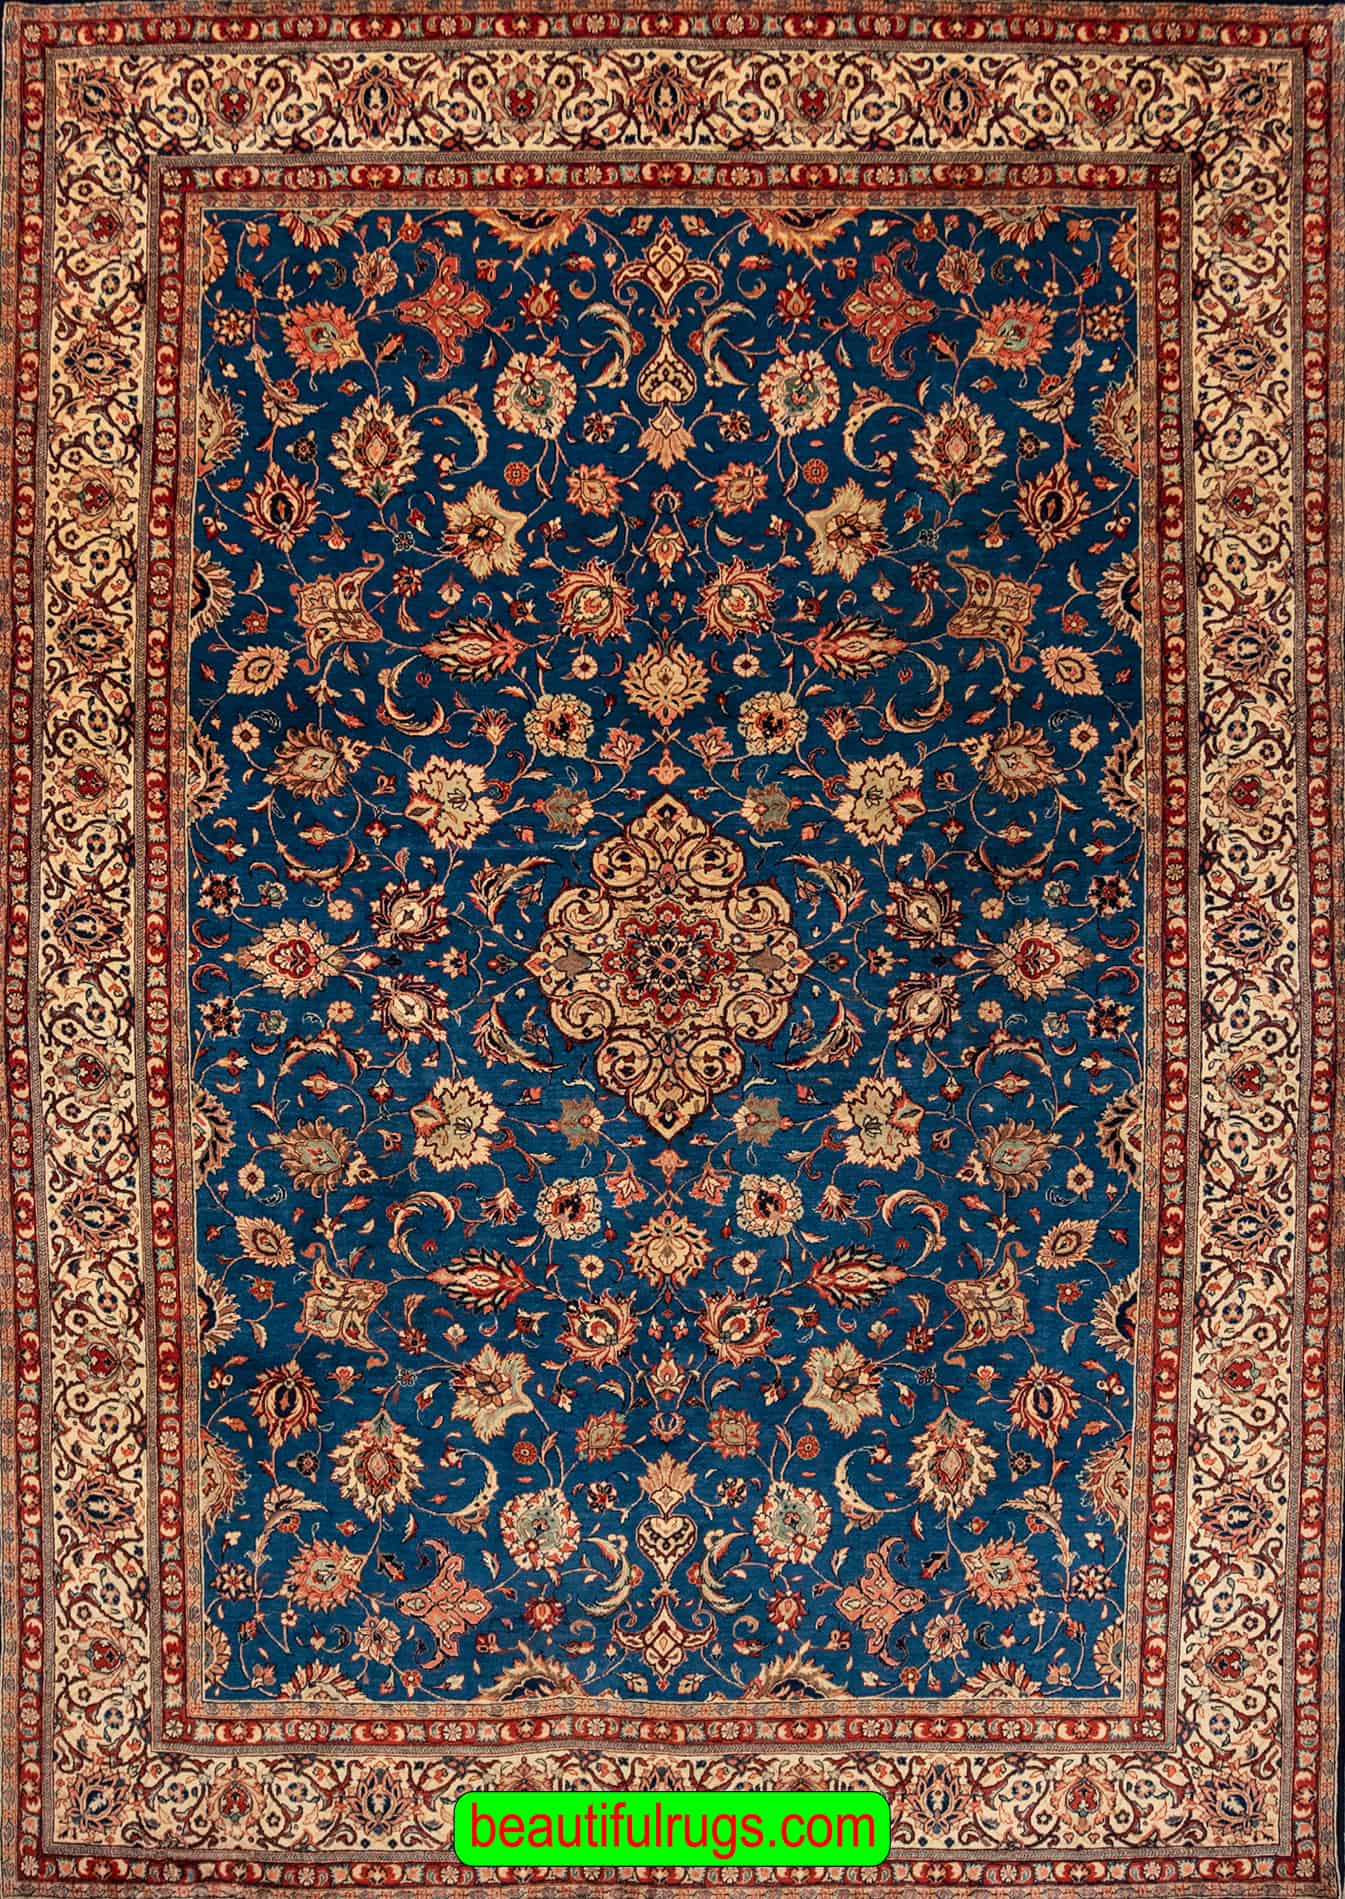 Blue Color Wool Rug, Handmade Persian Sarouk Rug, Traditional Rug